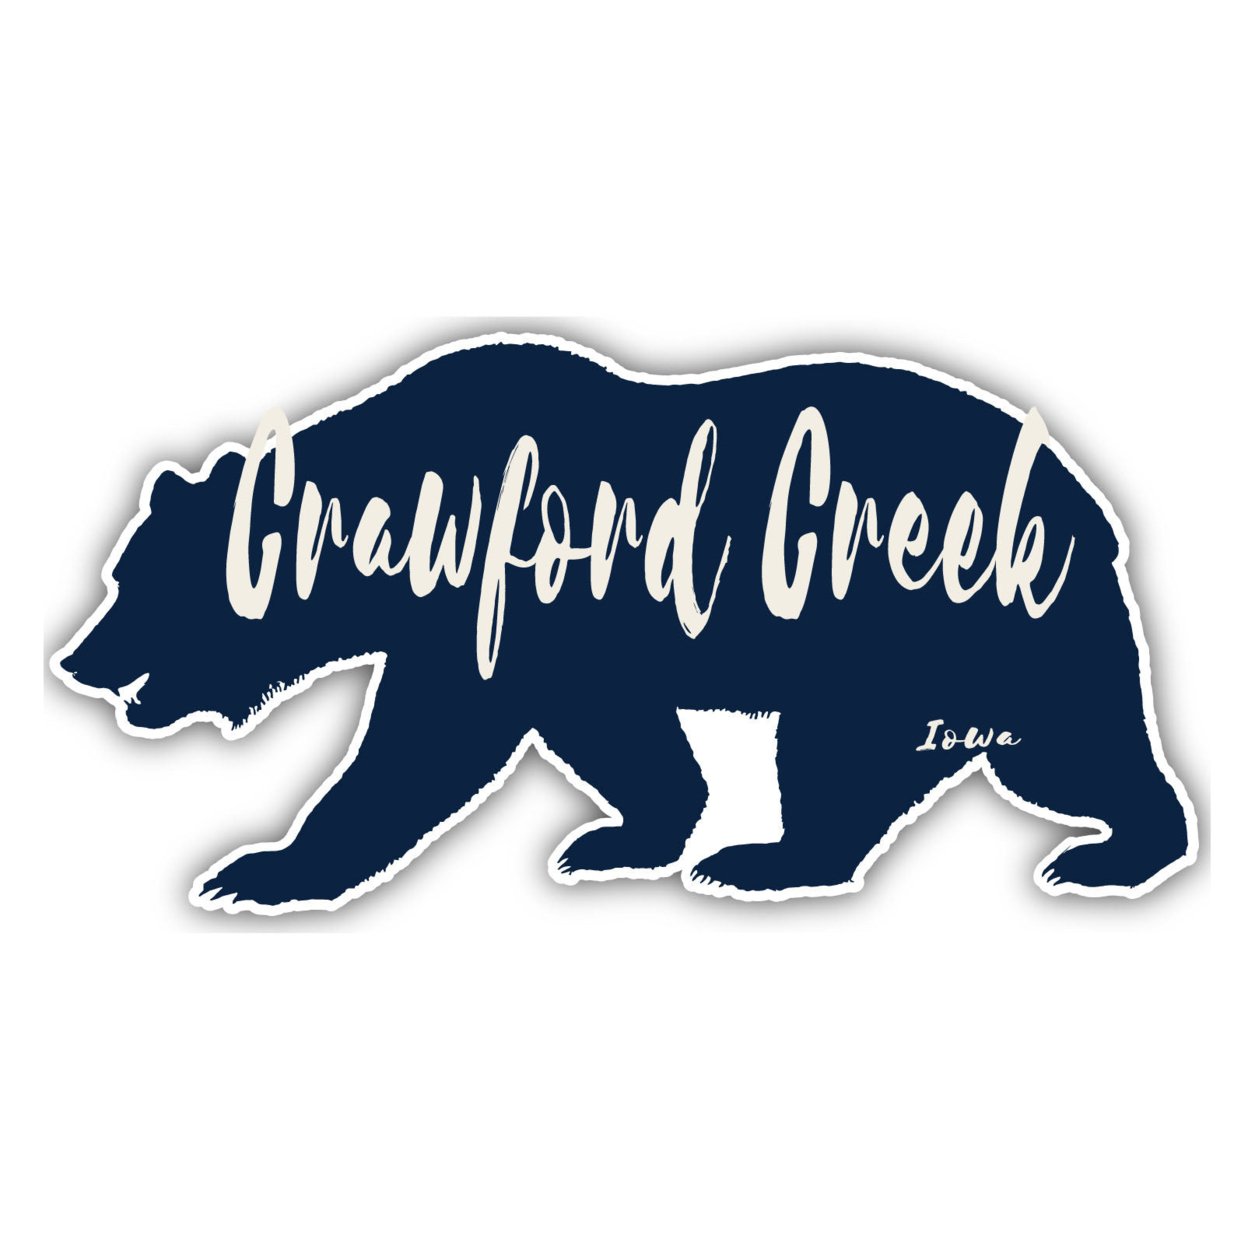 Crawford Creek Iowa Souvenir Decorative Stickers (Choose Theme And Size) - Single Unit, 10-Inch, Bear